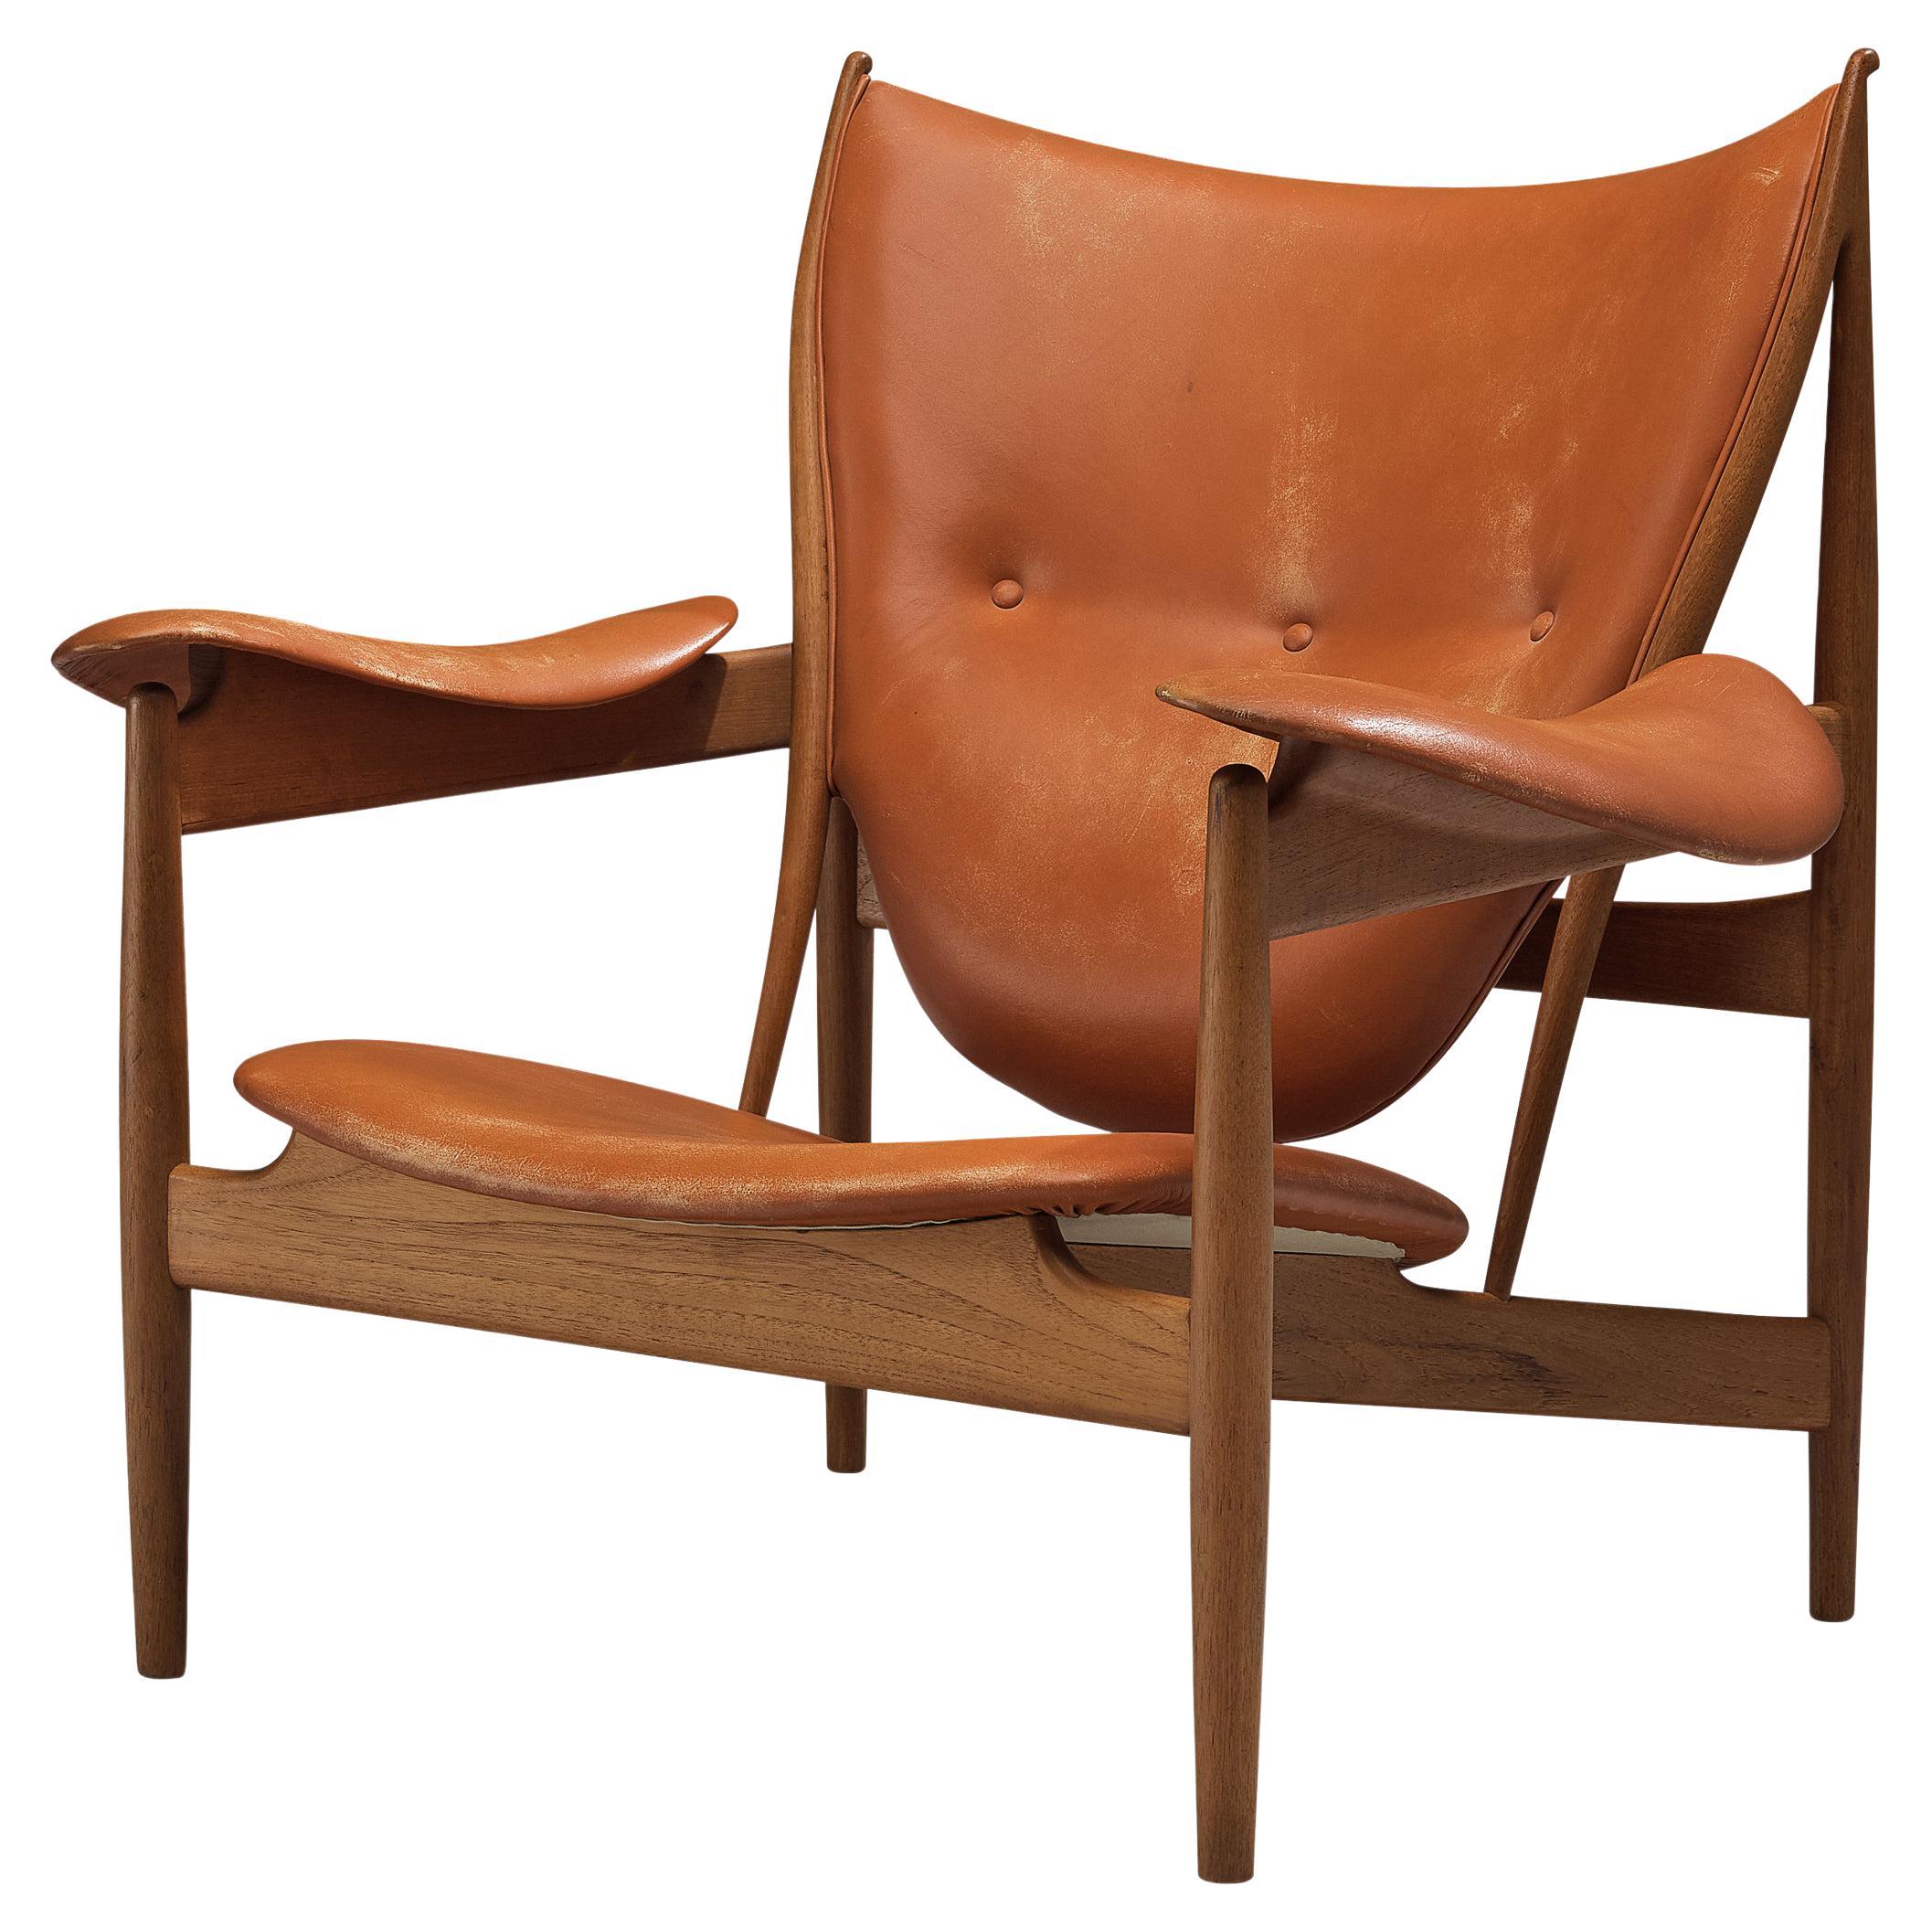 Niels Vodder's Own ‘Chieftain’ Lounge Chair by Finn Juhl